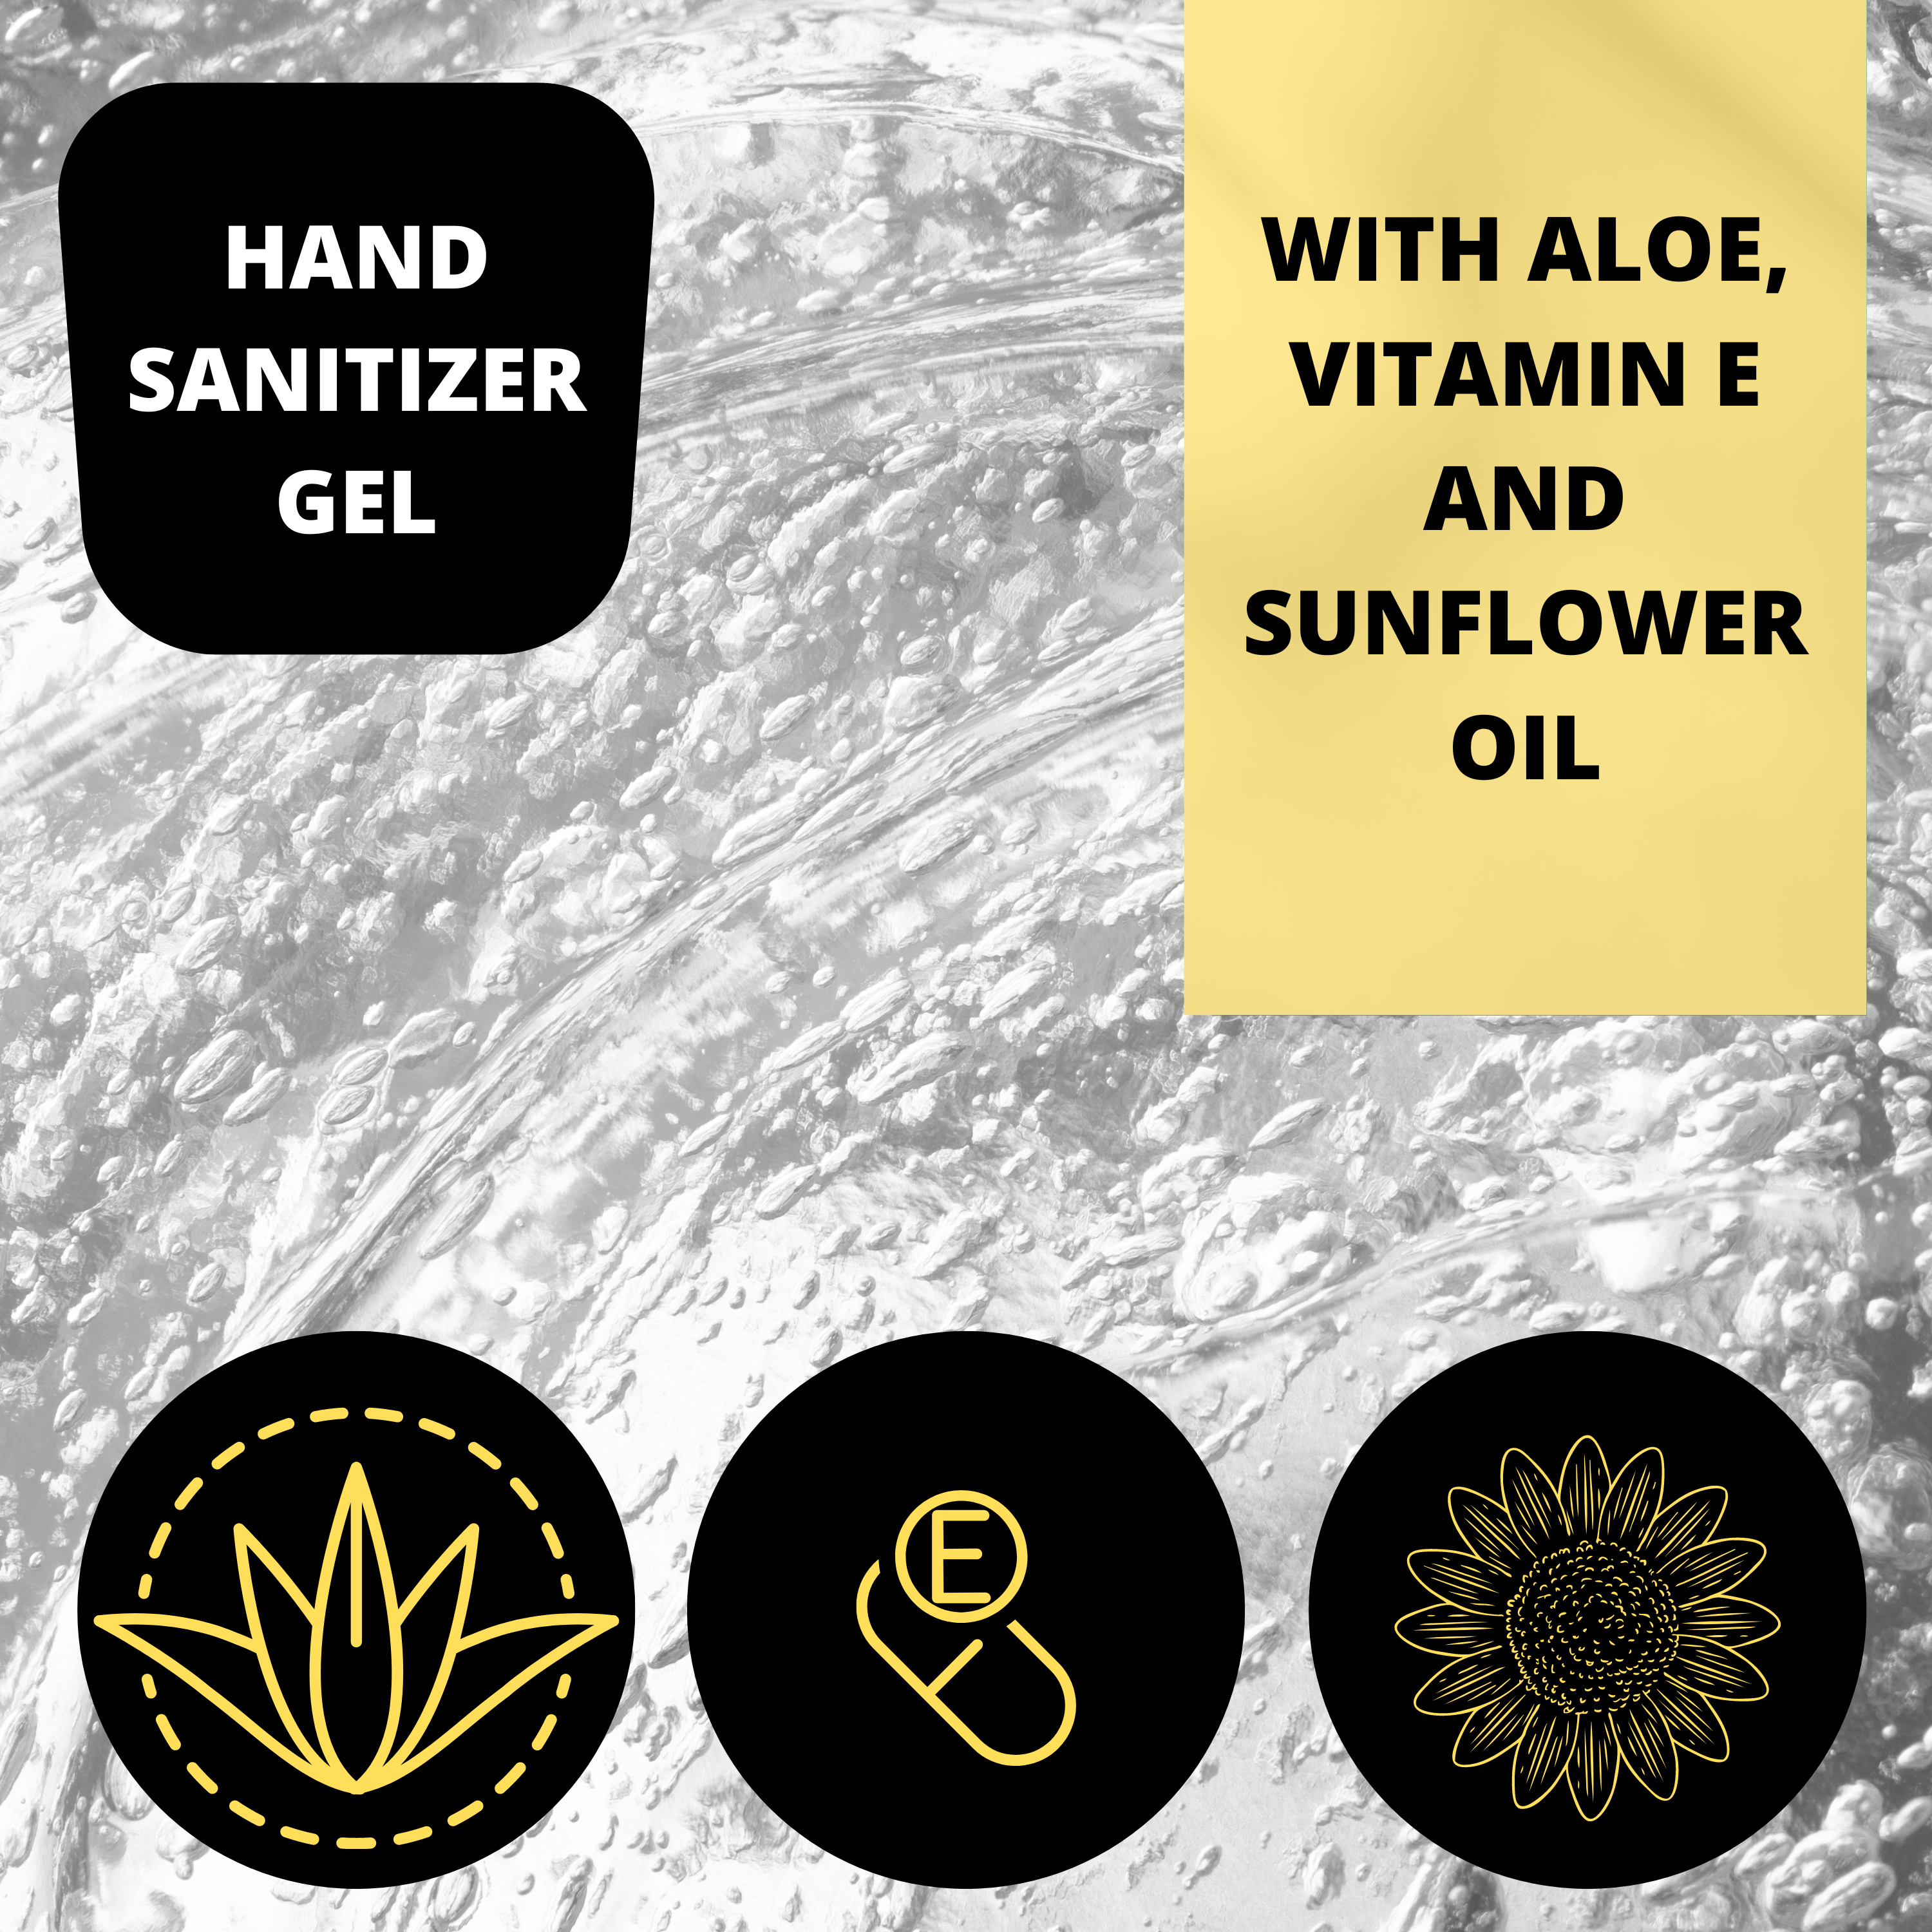 Black Canyon Apple Pecan Fritter Scented Hand Sanitizer Gel